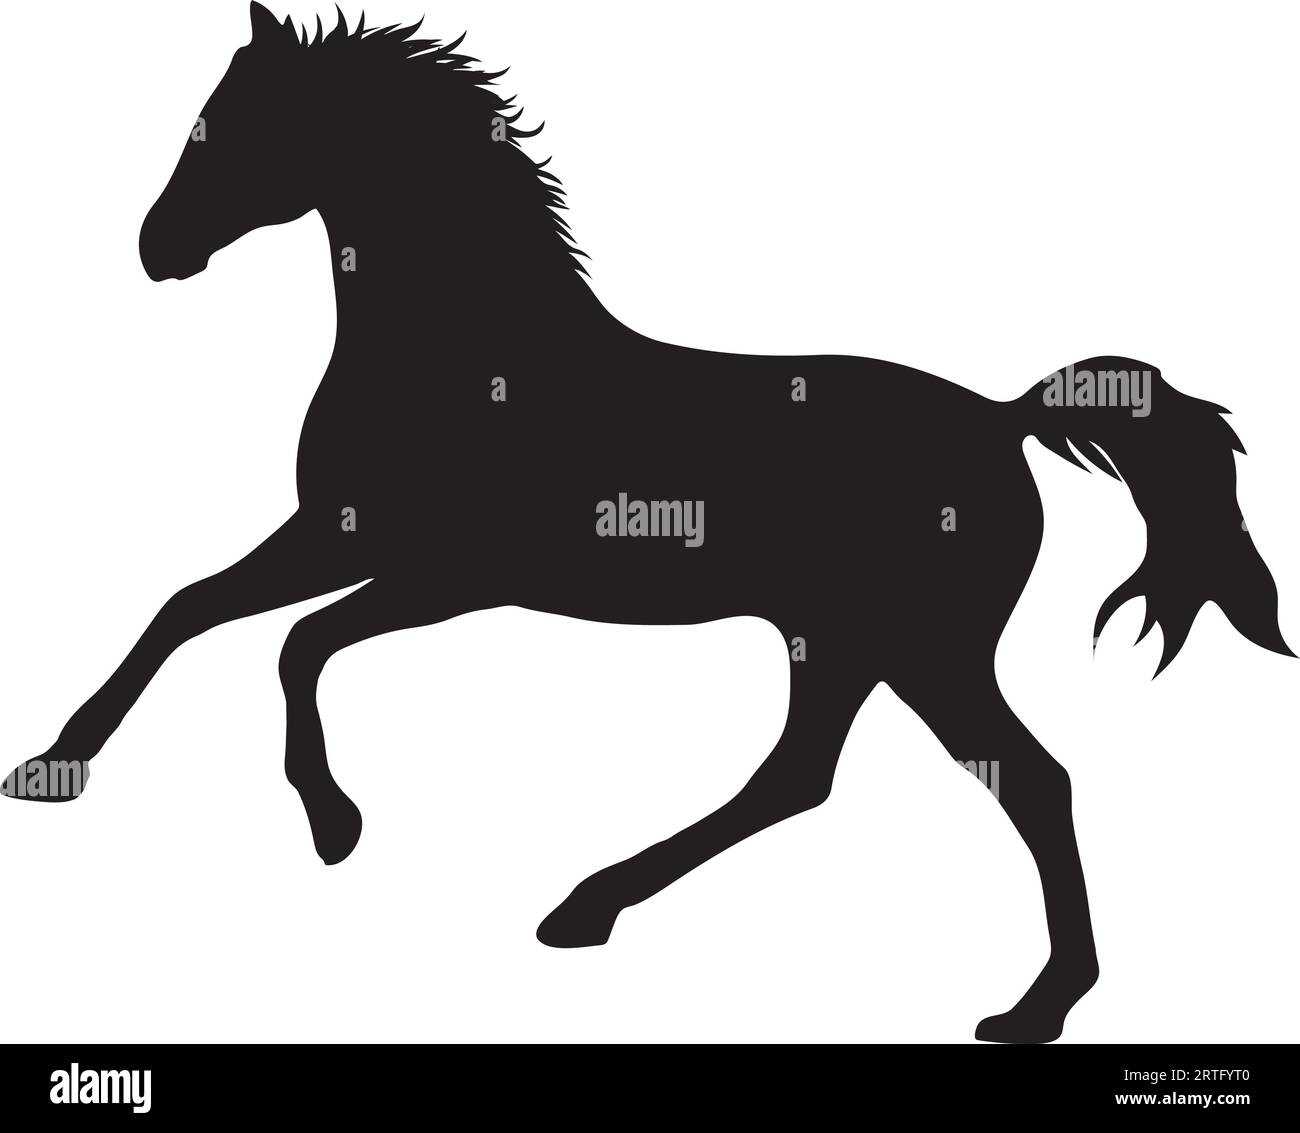 Laufende Pferdevektor-, Silhouette- oder Illustrationsdatei Stock Vektor